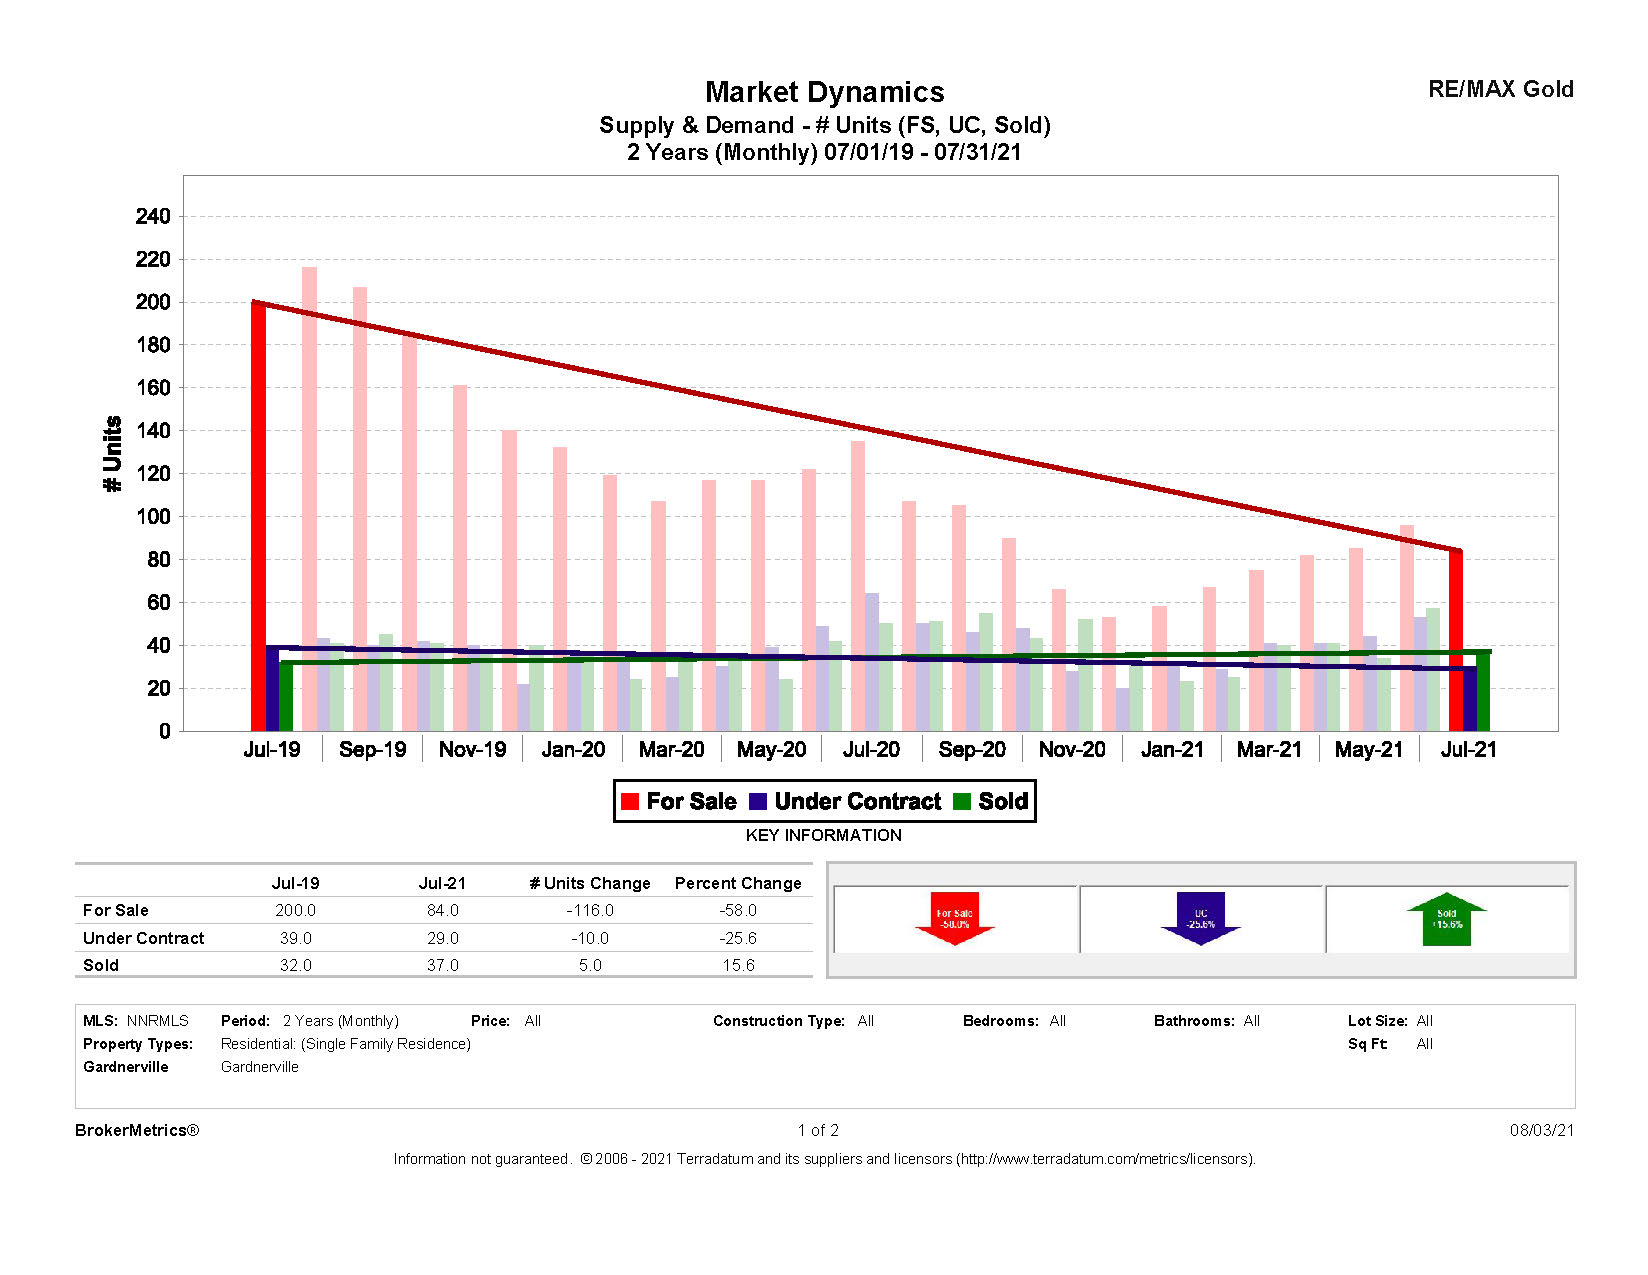 July Stat: Supply & Demand graph for Gardnerville, NV